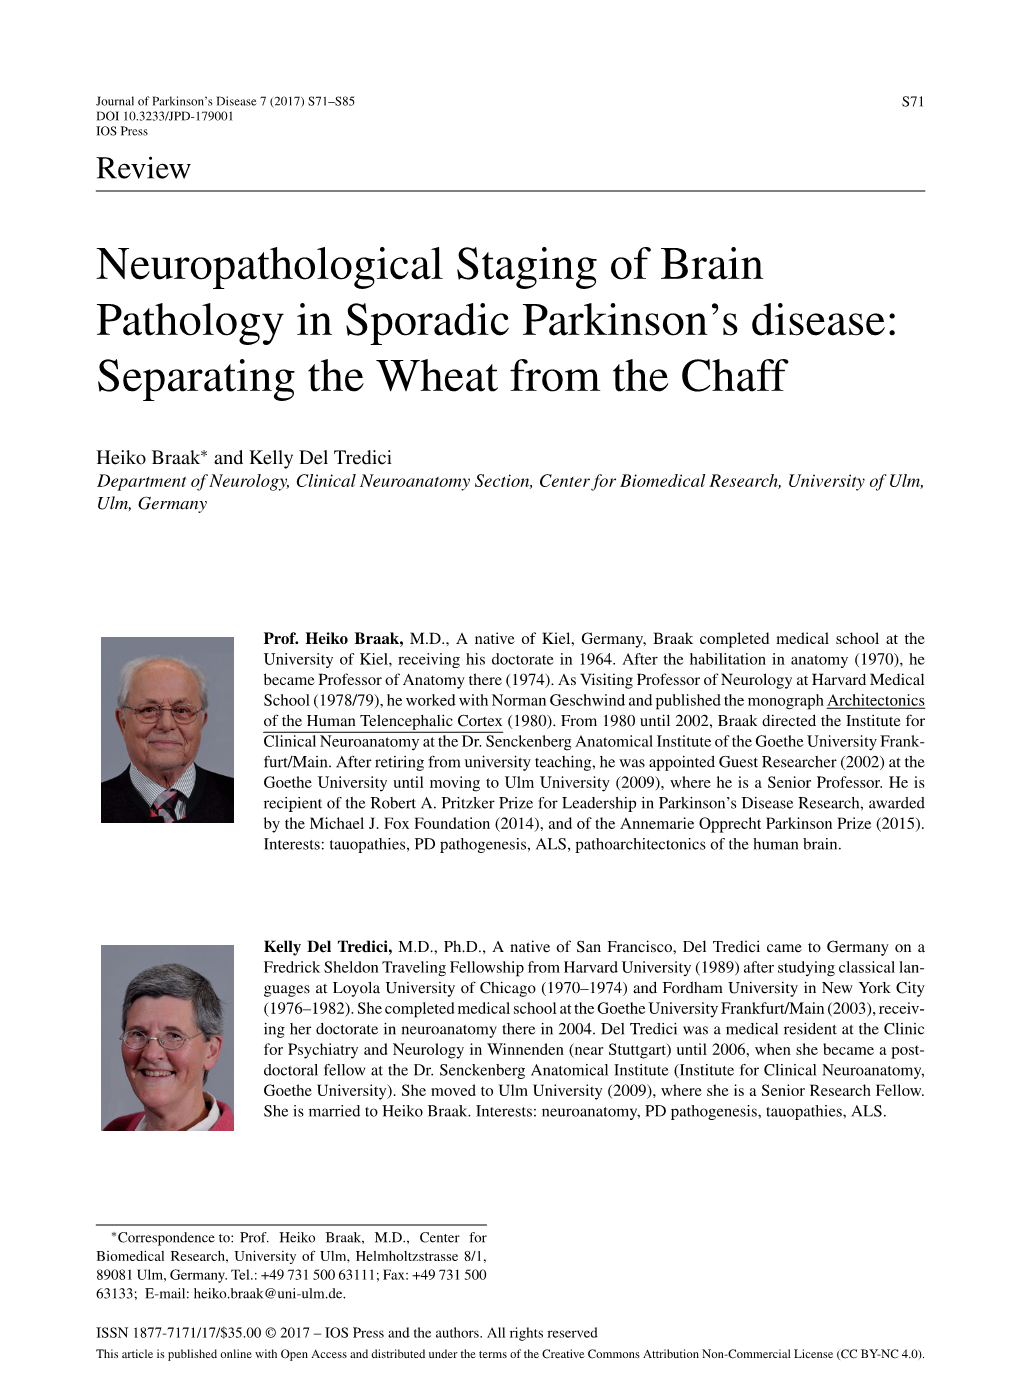 Neuropathological Staging of Brain Pathology in Sporadic Parkinson's Disease